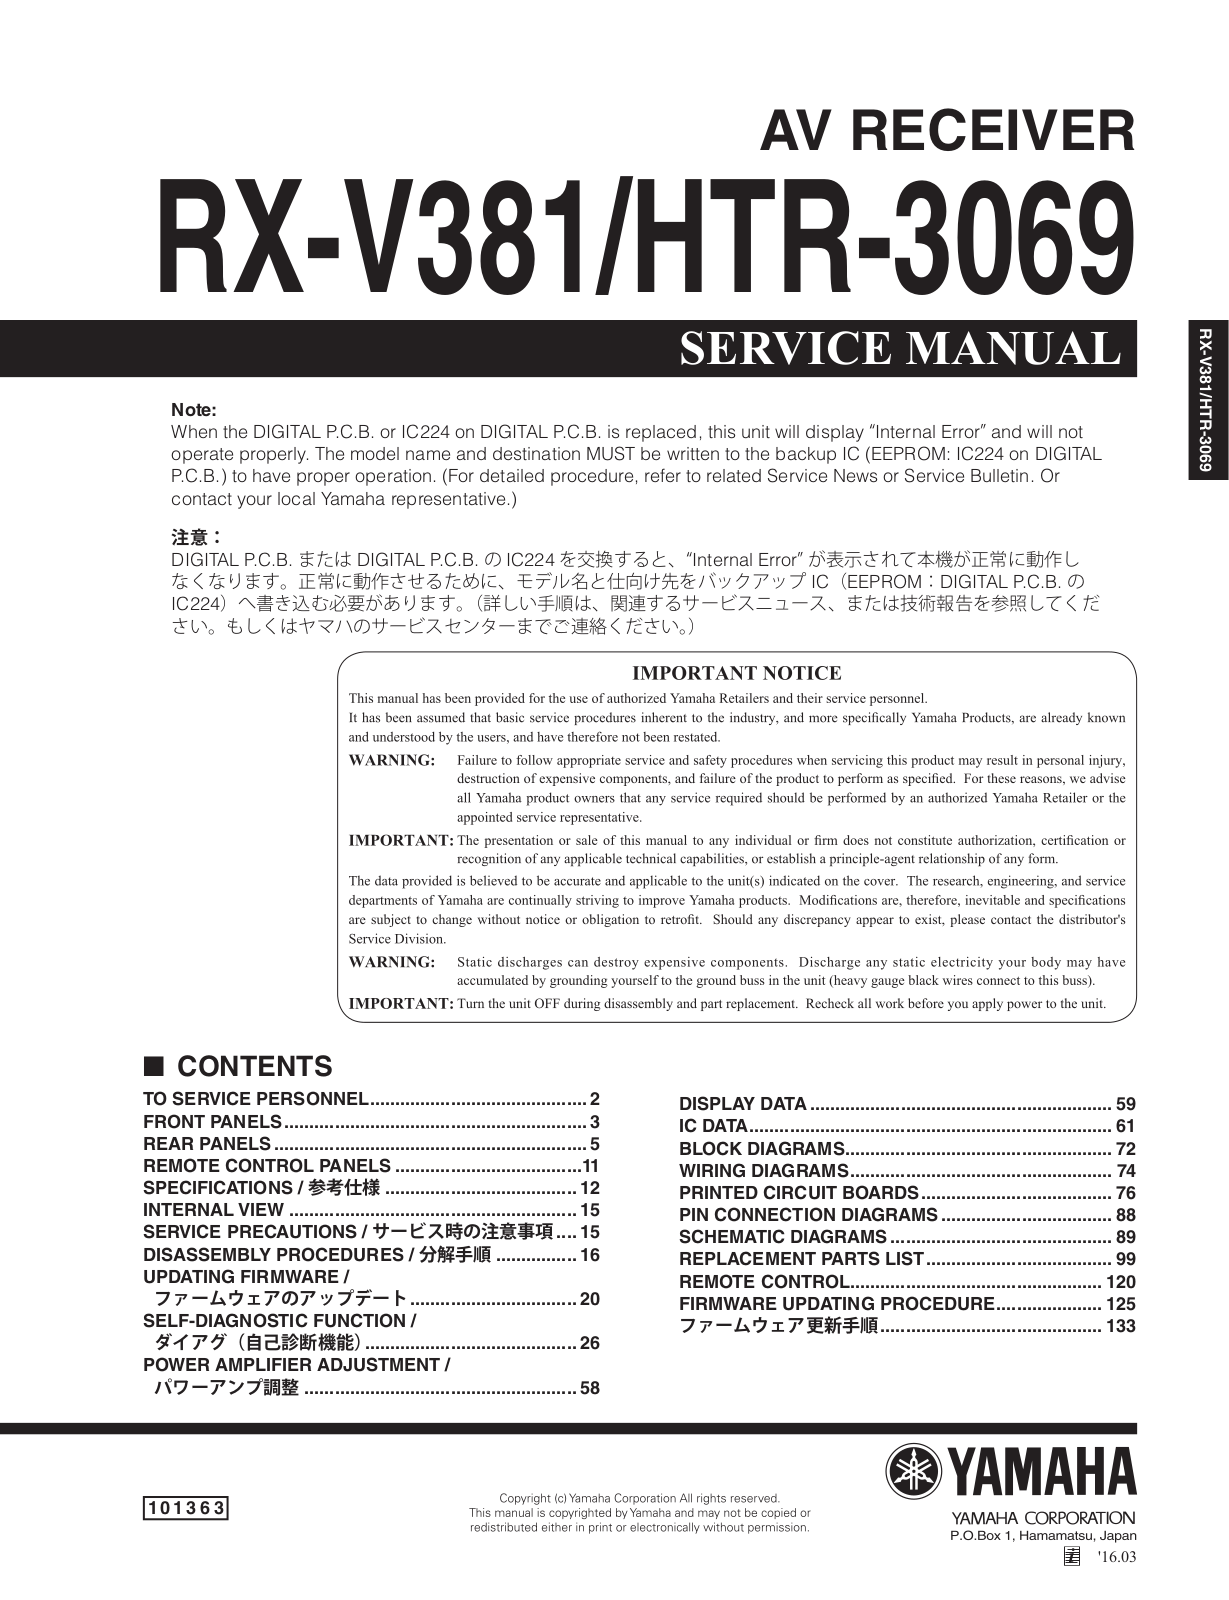 Yamaha RX-V381, HTR-3069 Service manual